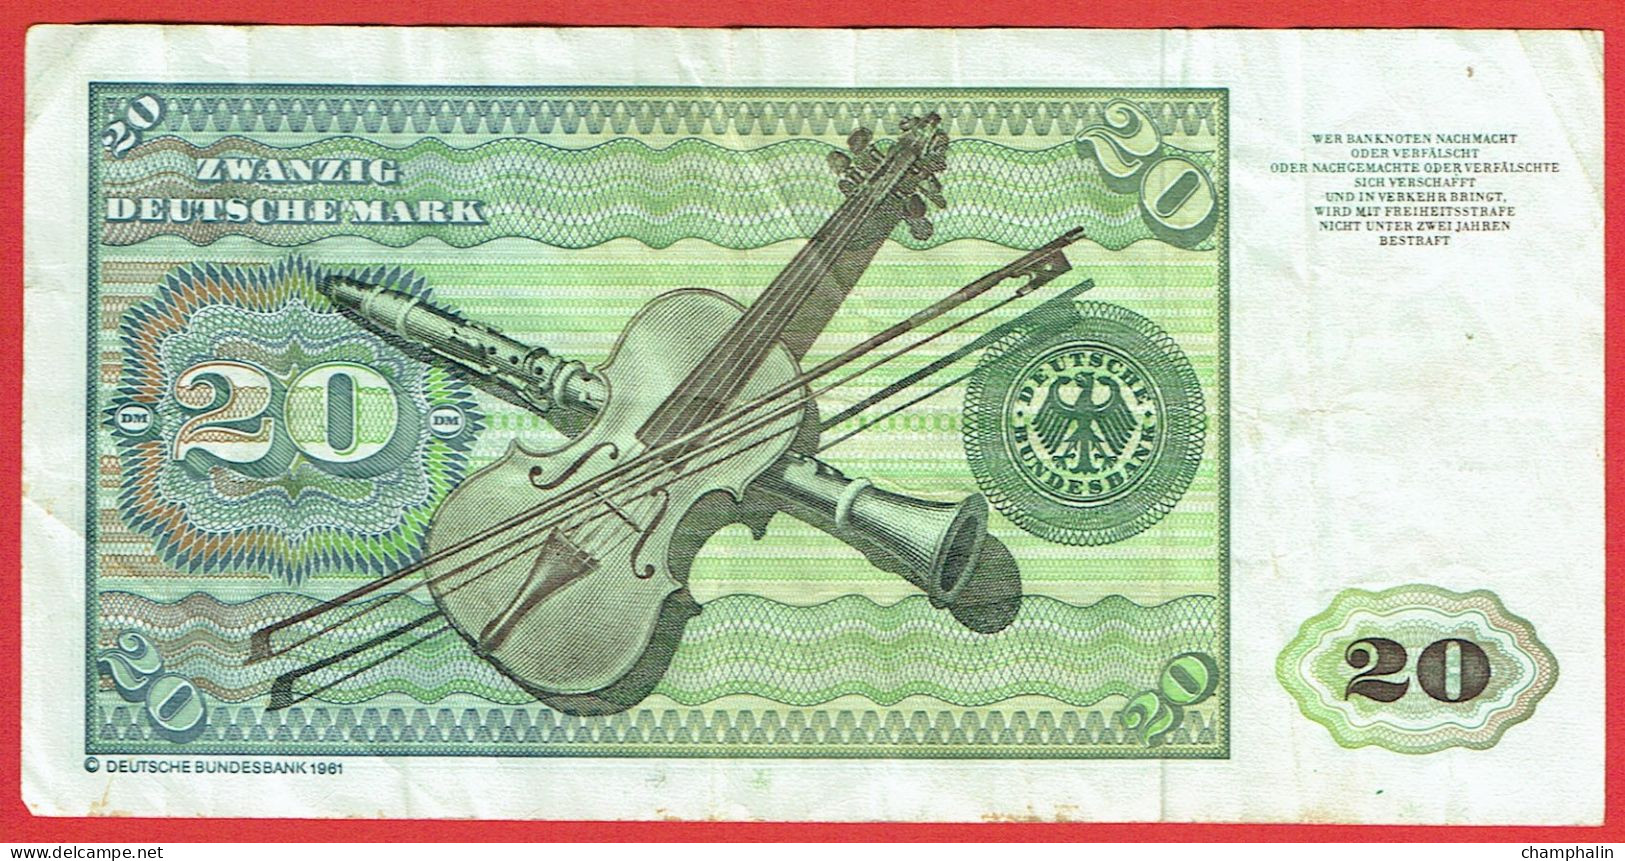 Allemagne - Billet De 20 Deutsche Mark - Elsbeth Tucher - 2 Janvier 1980 - P32d - 20 DM